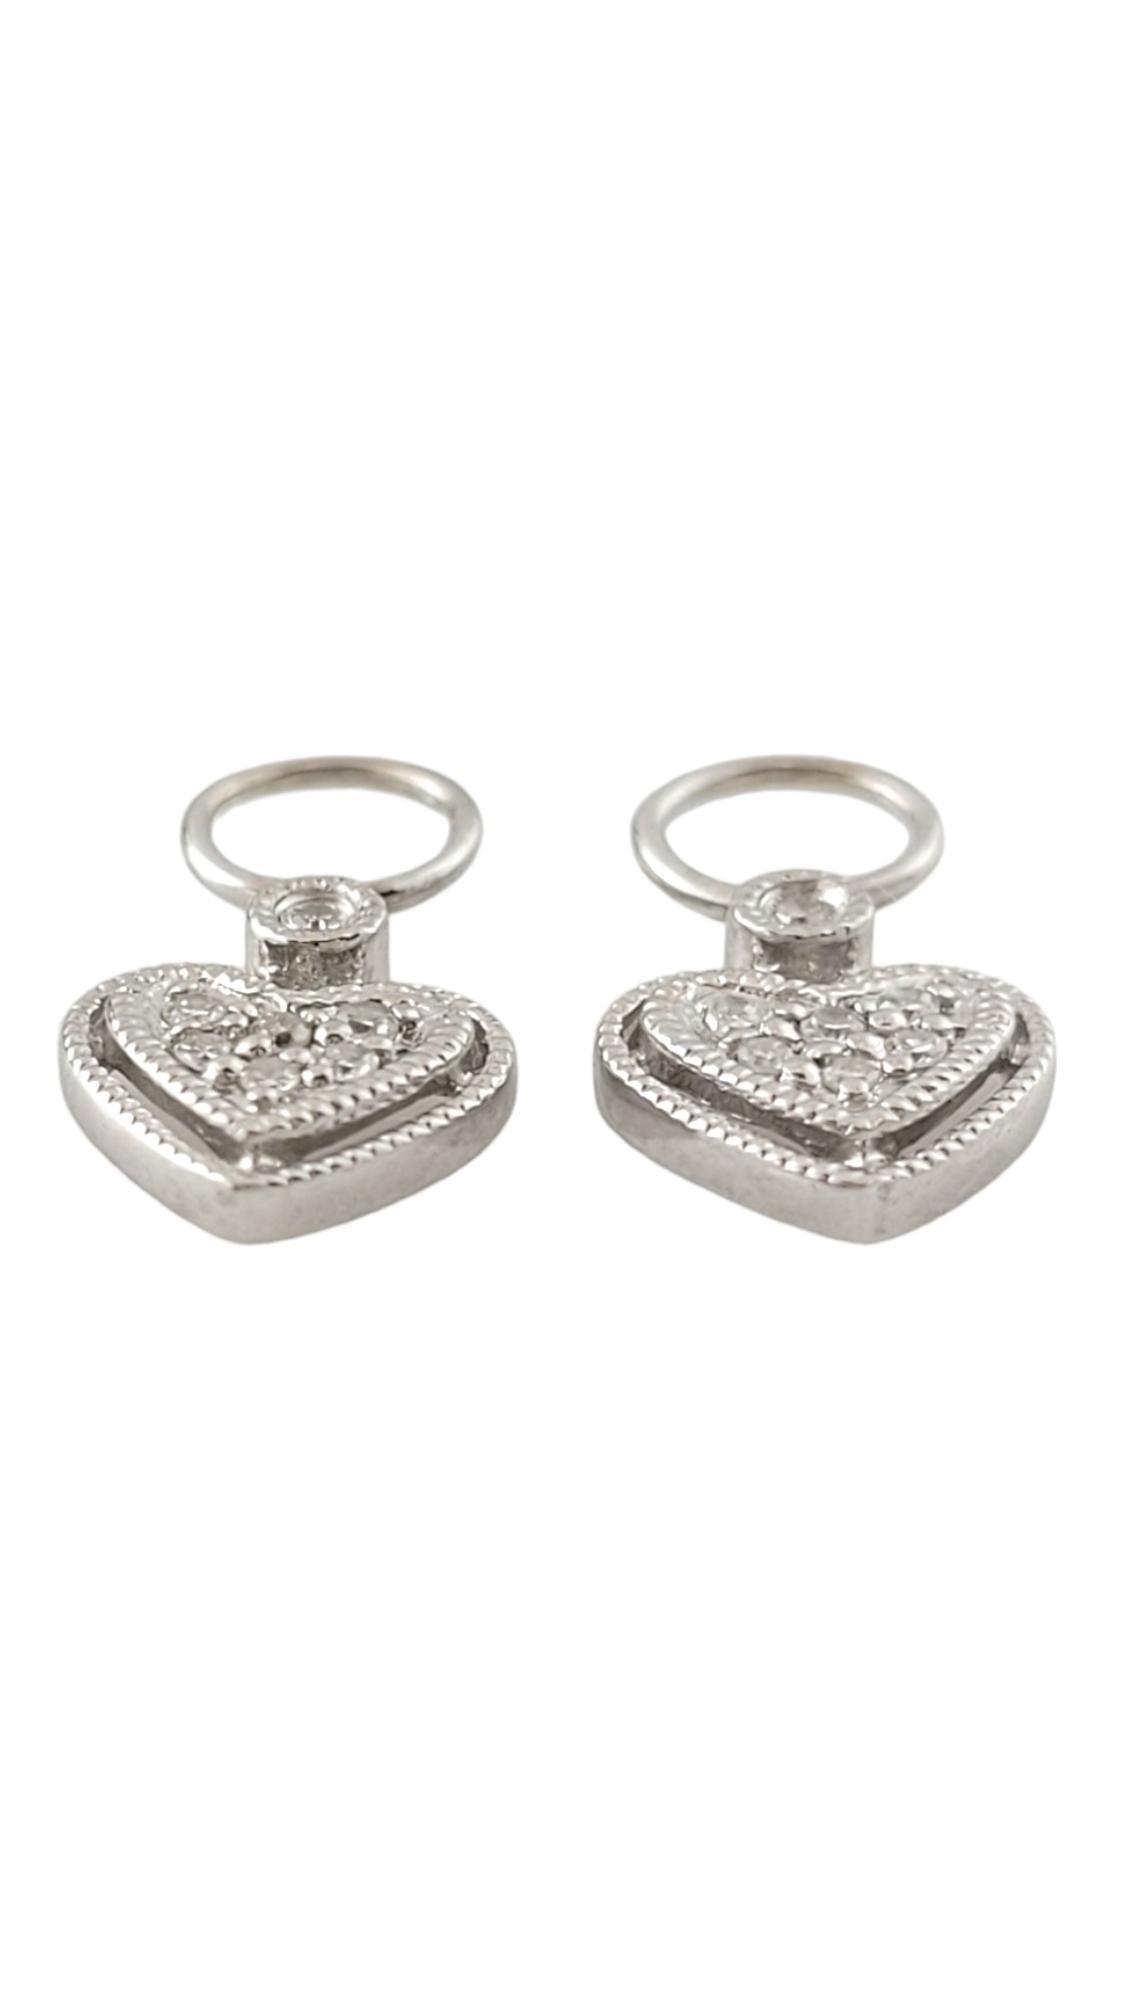 Single Cut 14K White Gold Diamond Heart Earring Charms for Hoop Earrings #16297